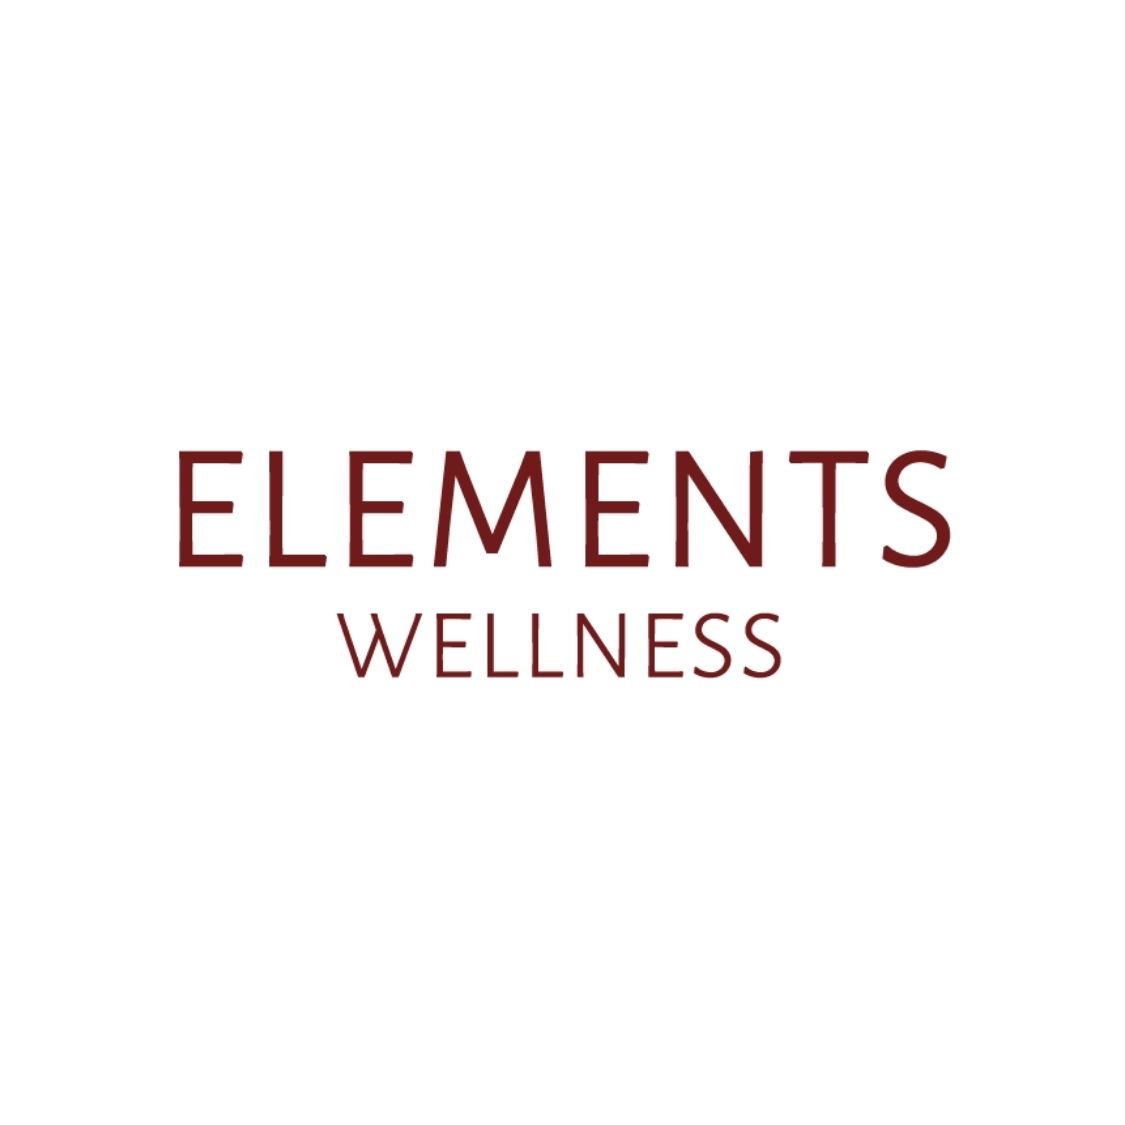 Elements Wellness logo.jpg